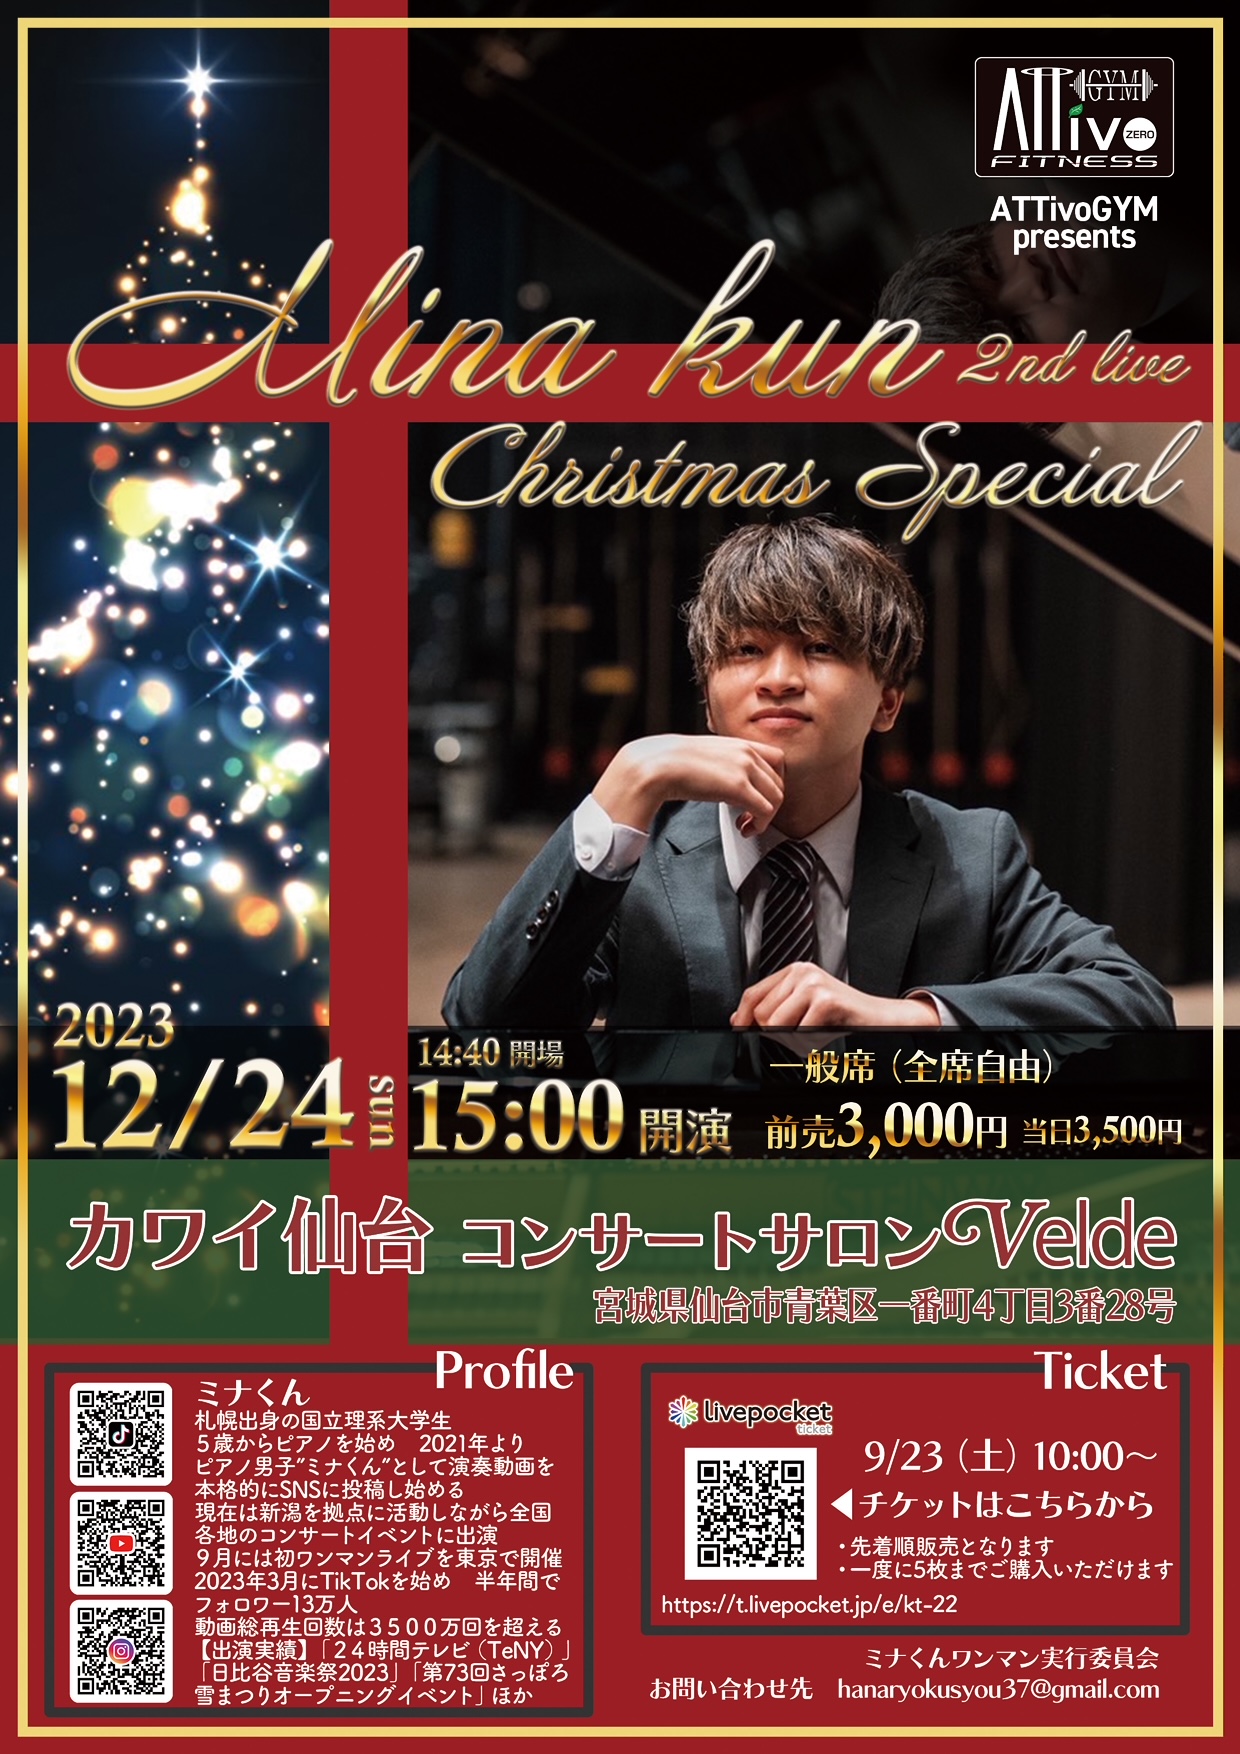 mina kun 2nd live -christmas special-